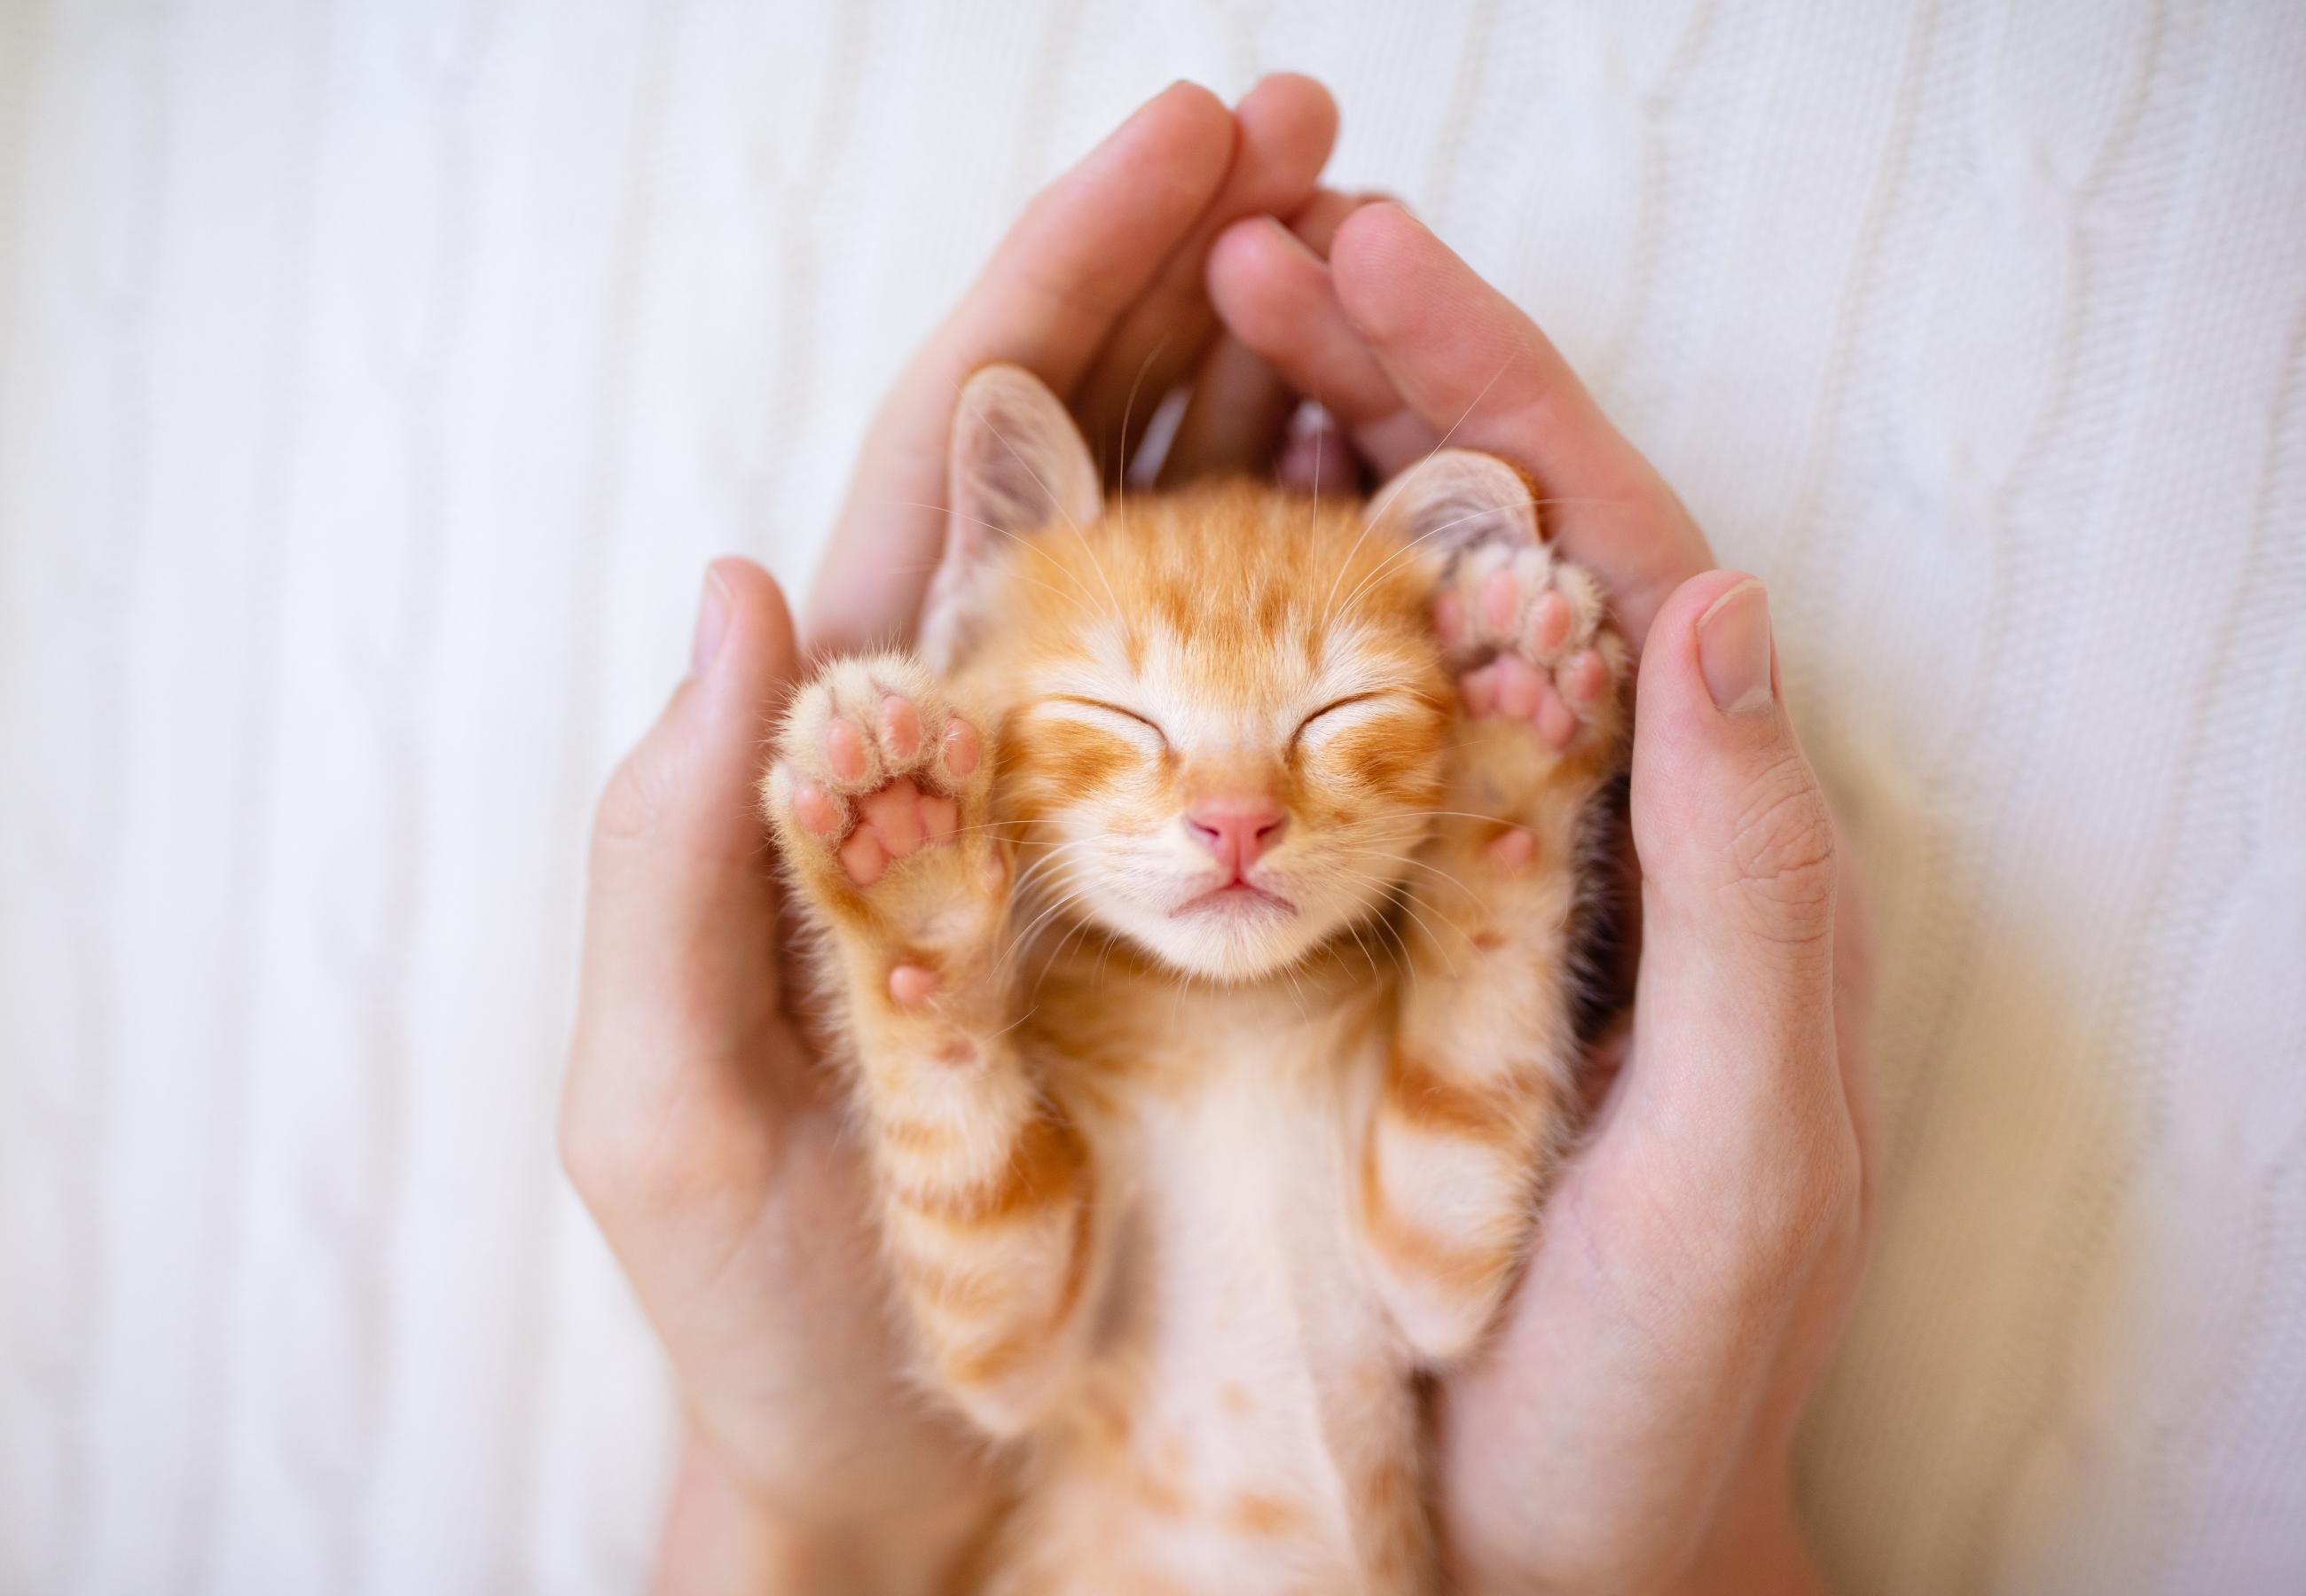 Tiny orange kitten sleep on it's back cradled in two human hands